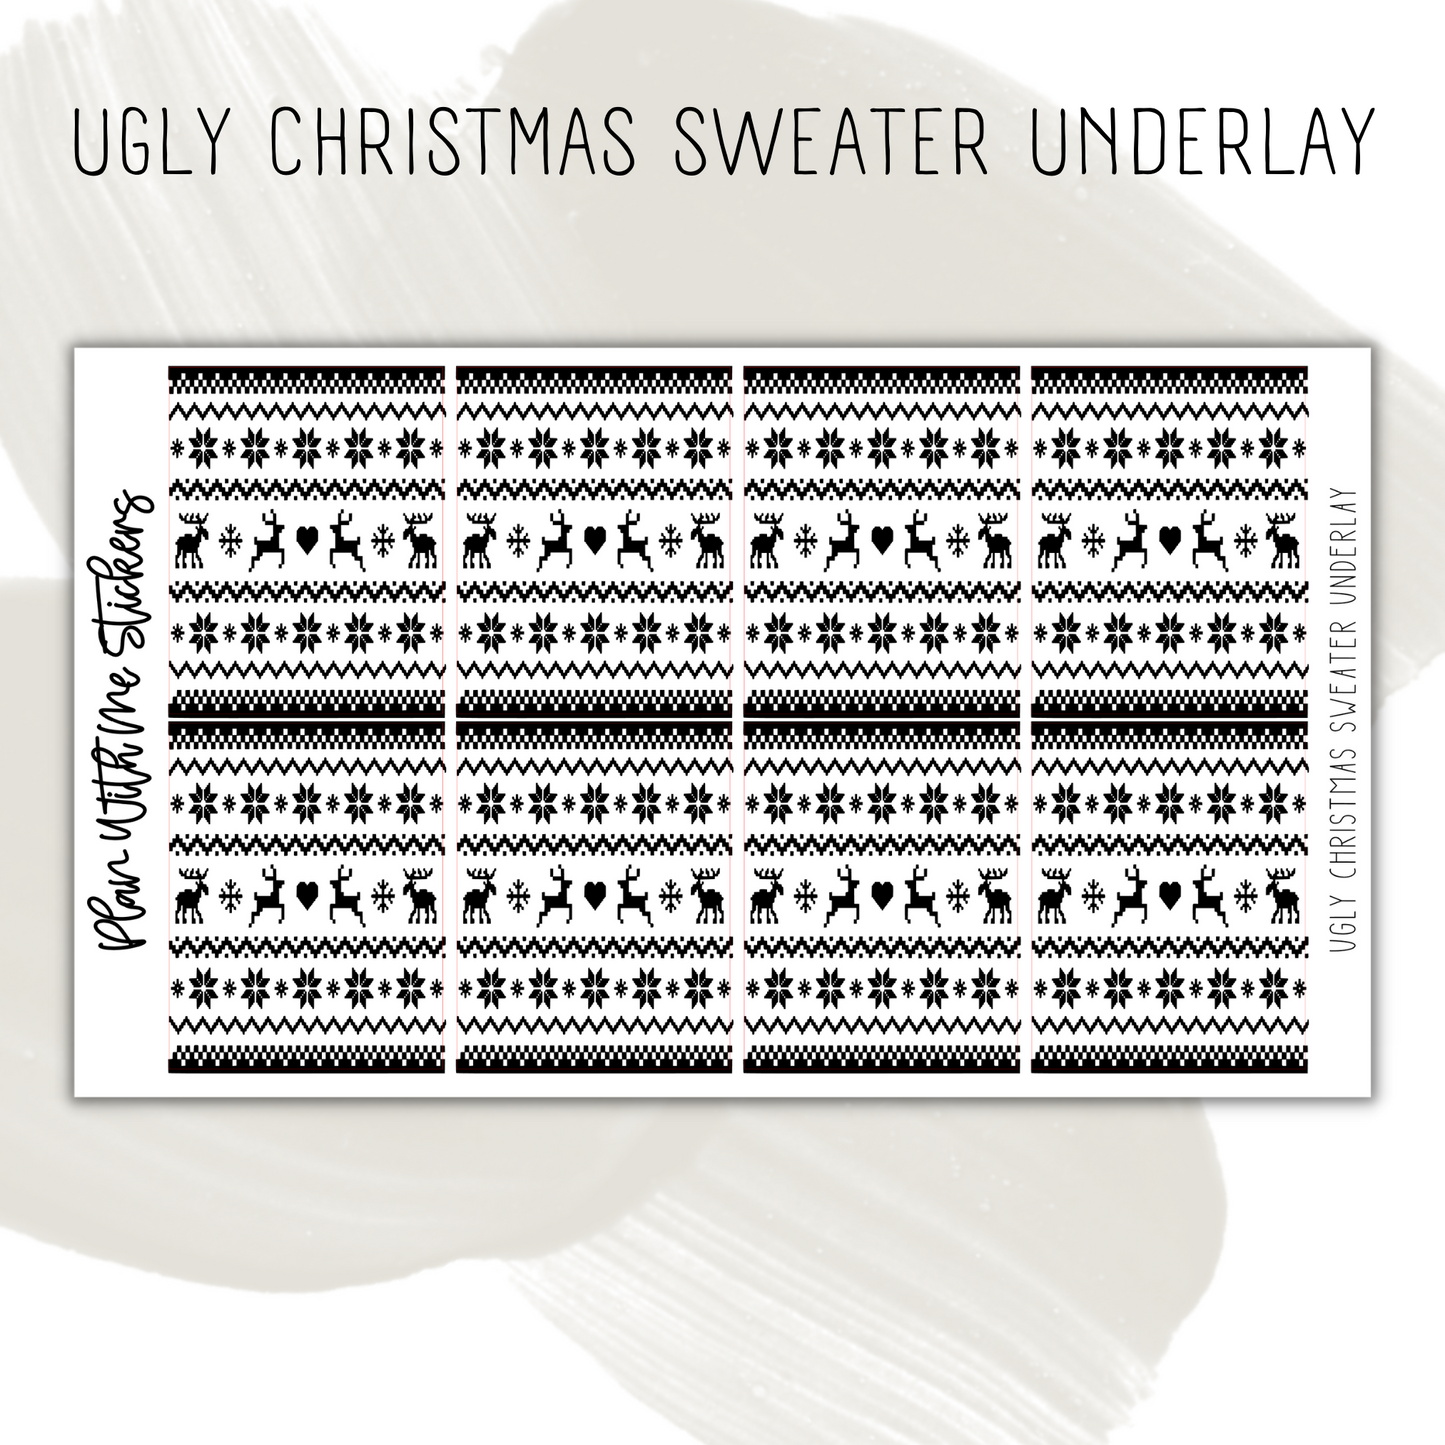 Ugly Christmas Sweater Underlay